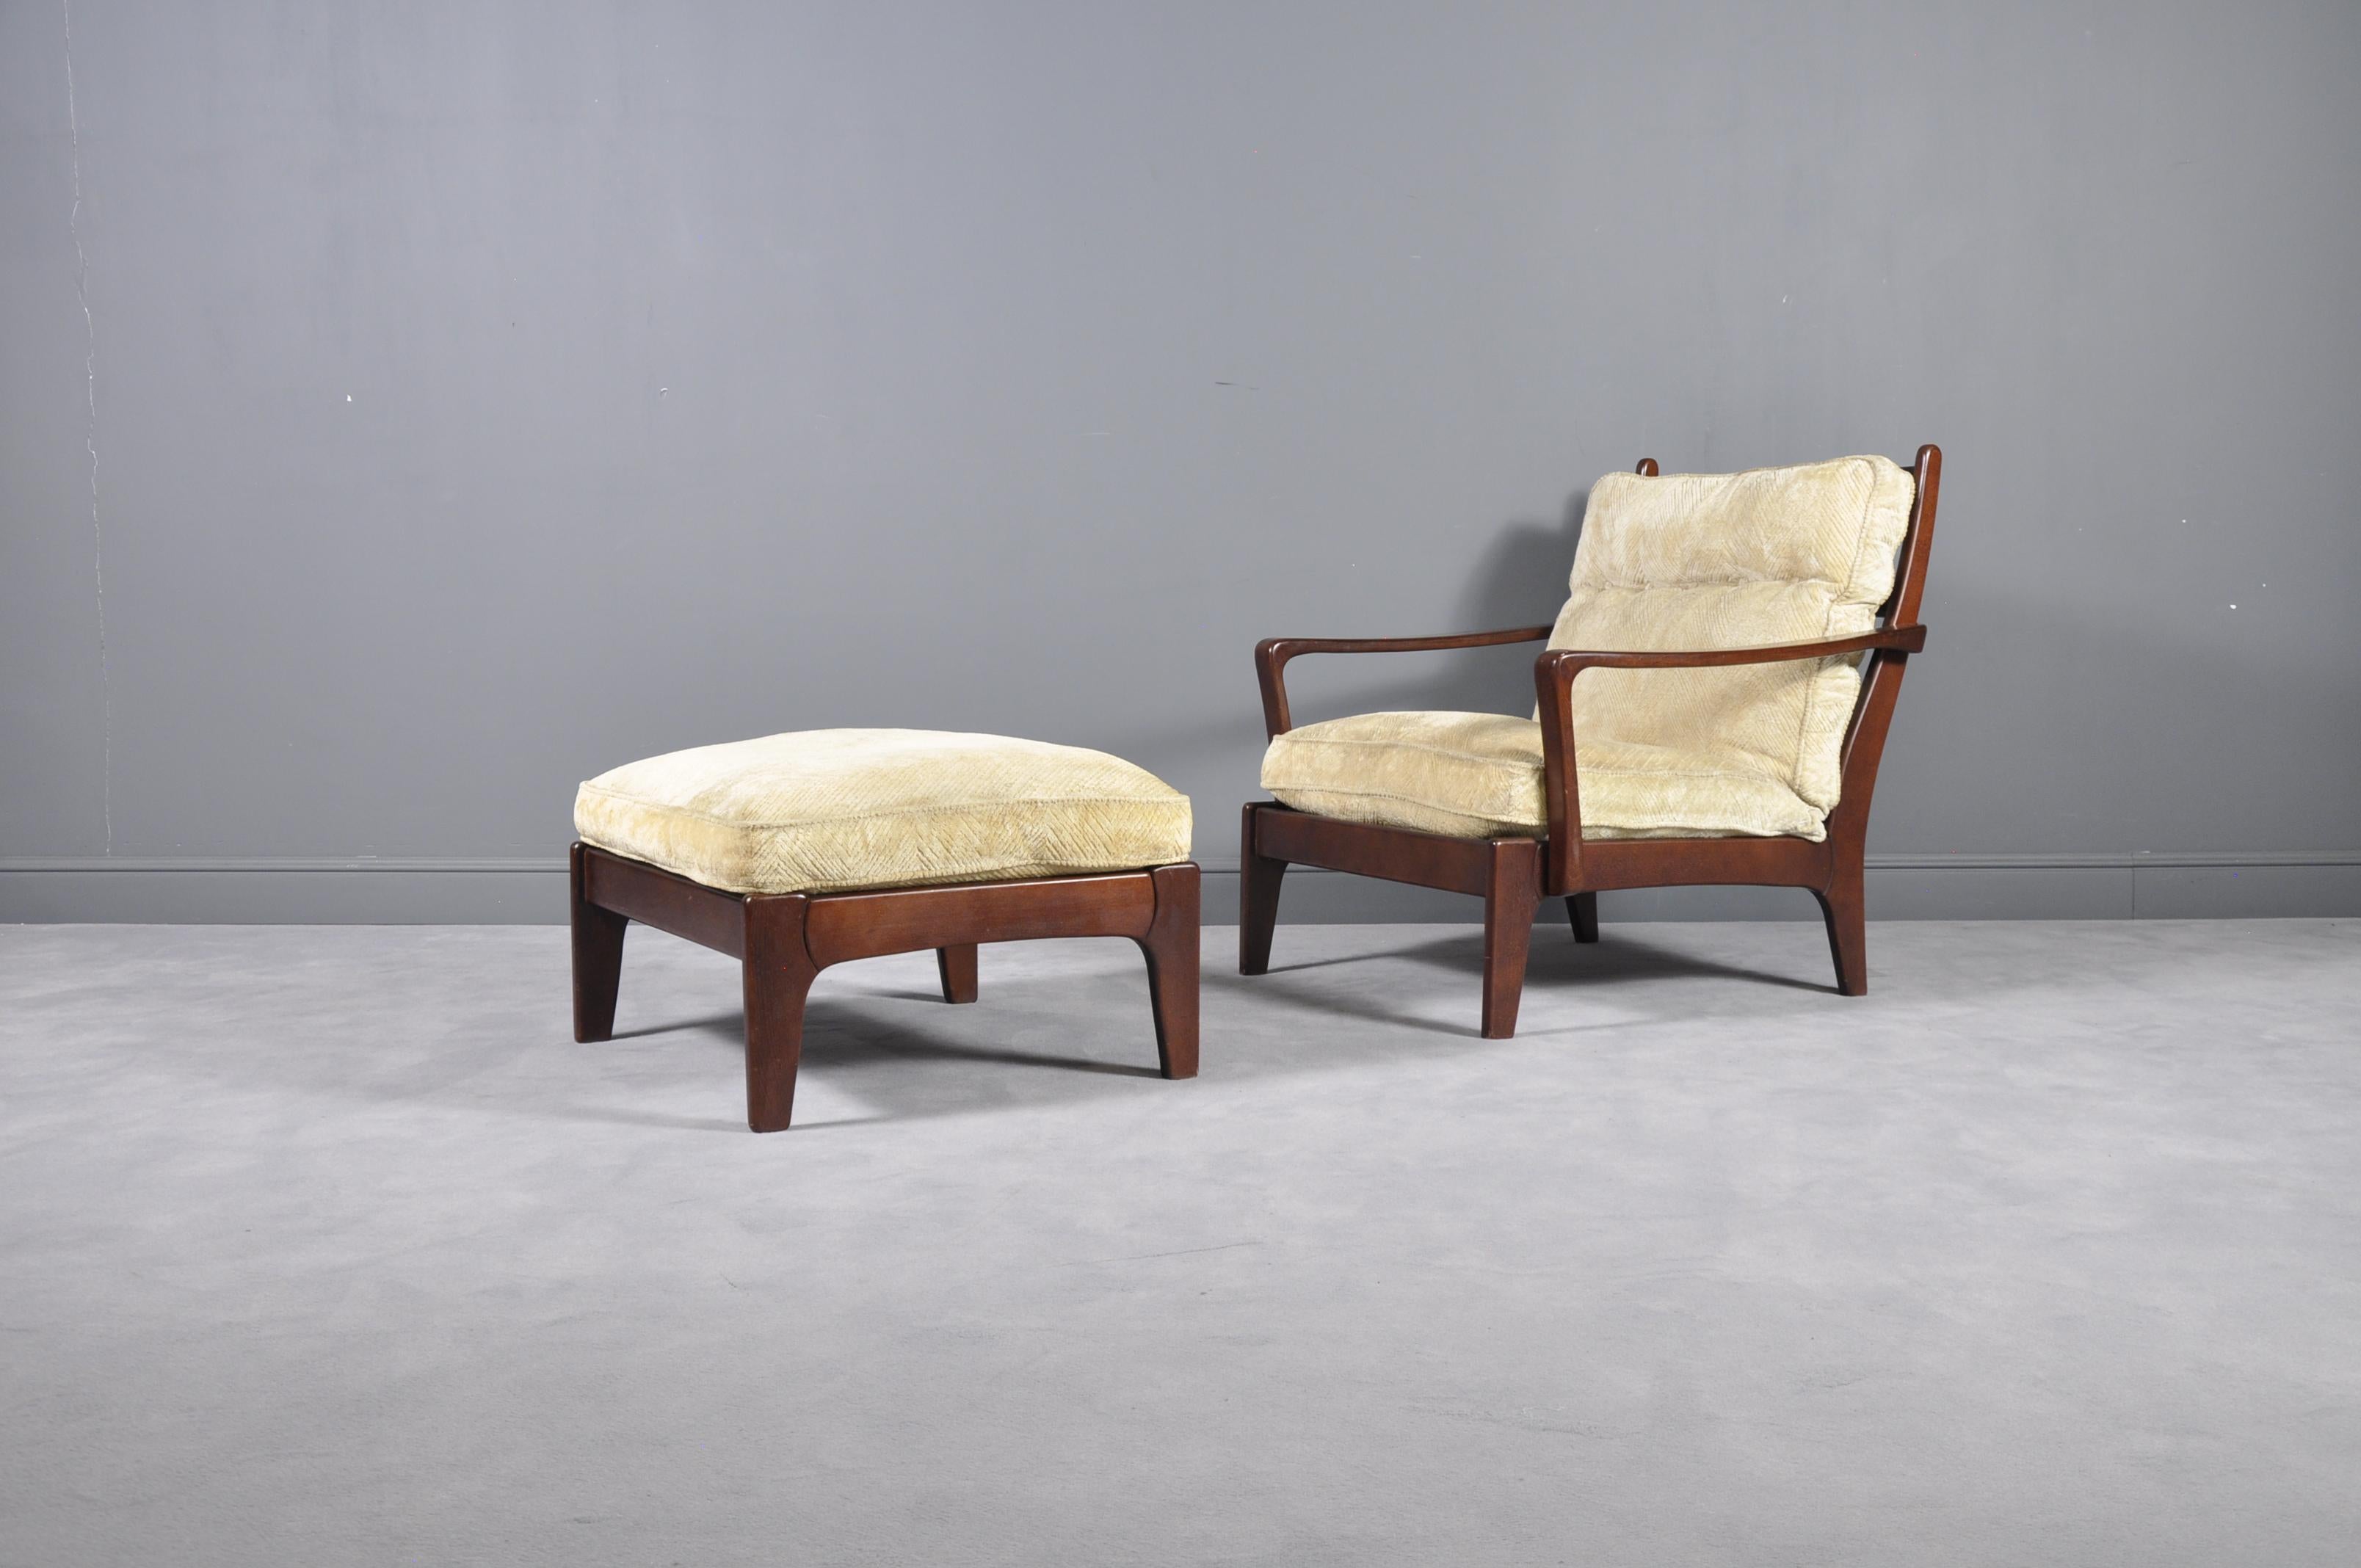 Armchair W 80 / D 90 / H 80 cm seat H 40 cm

Ottoman W 65 / 60 / H 40 cm

Danish modern mahogany armchair with matching ottoman from circa 1970, in original velvet beige fabric.